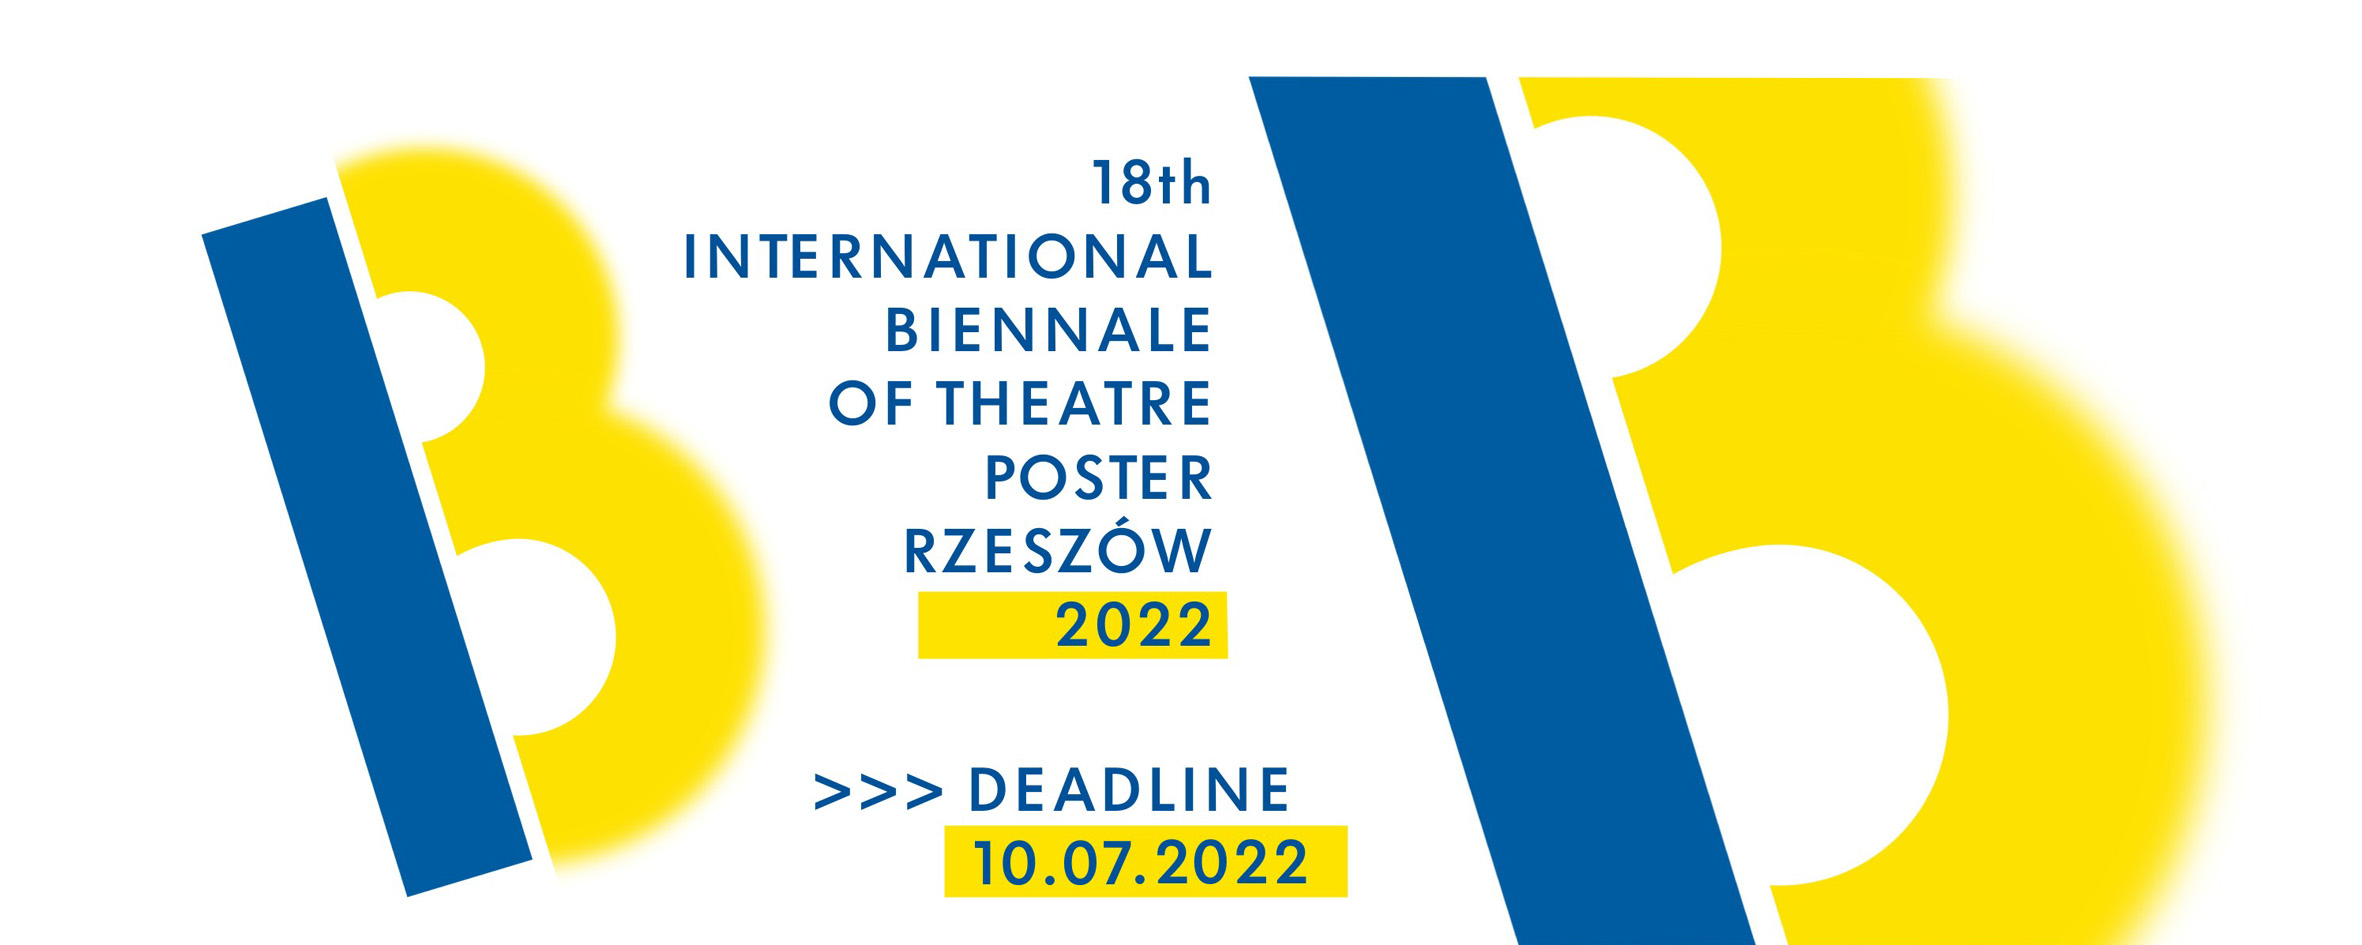 18th International Biennale of Theatre Poster 2022